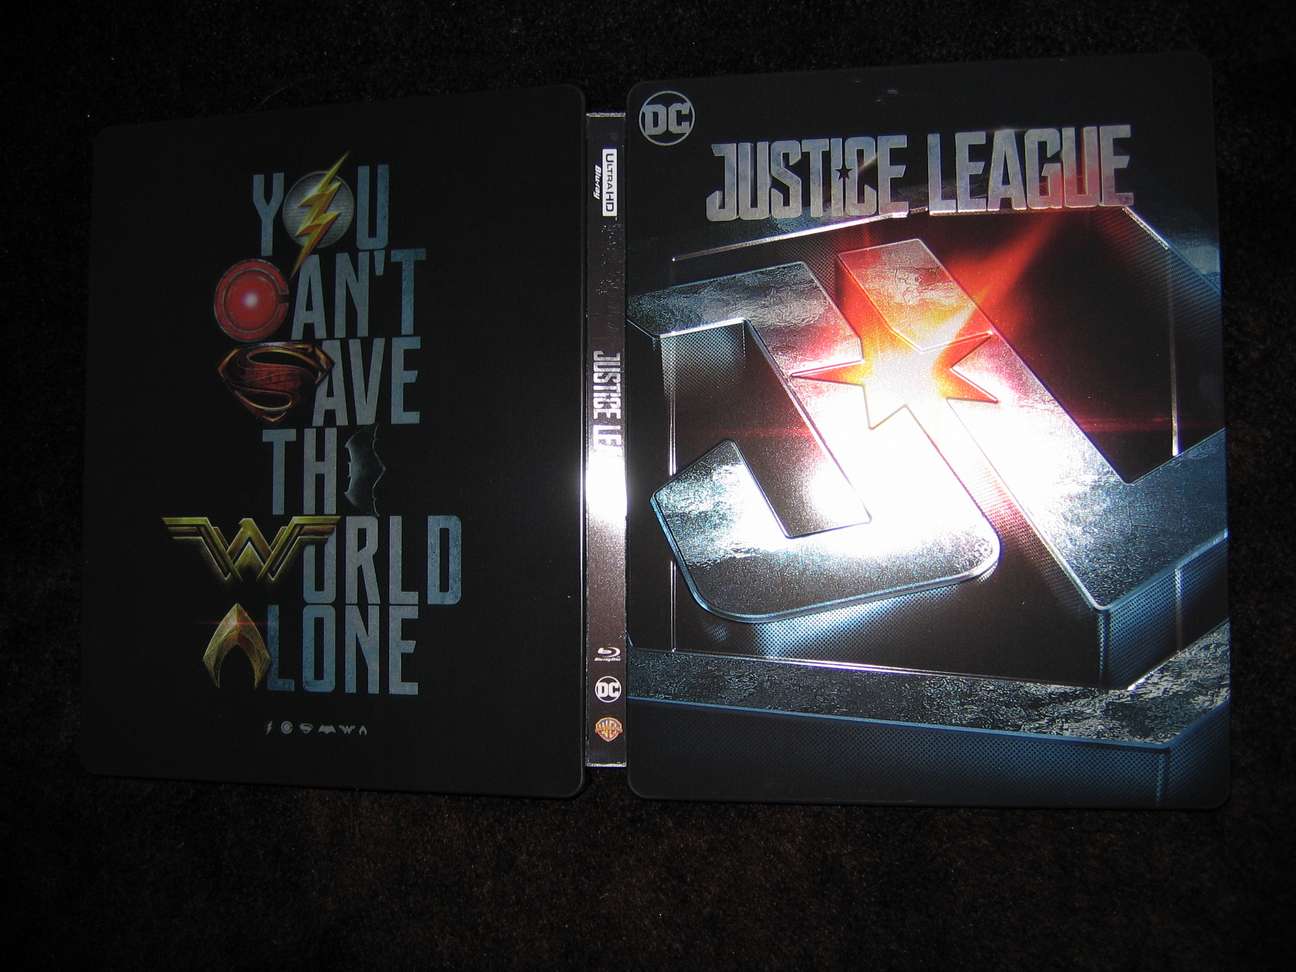 Justice_League_b.JPG